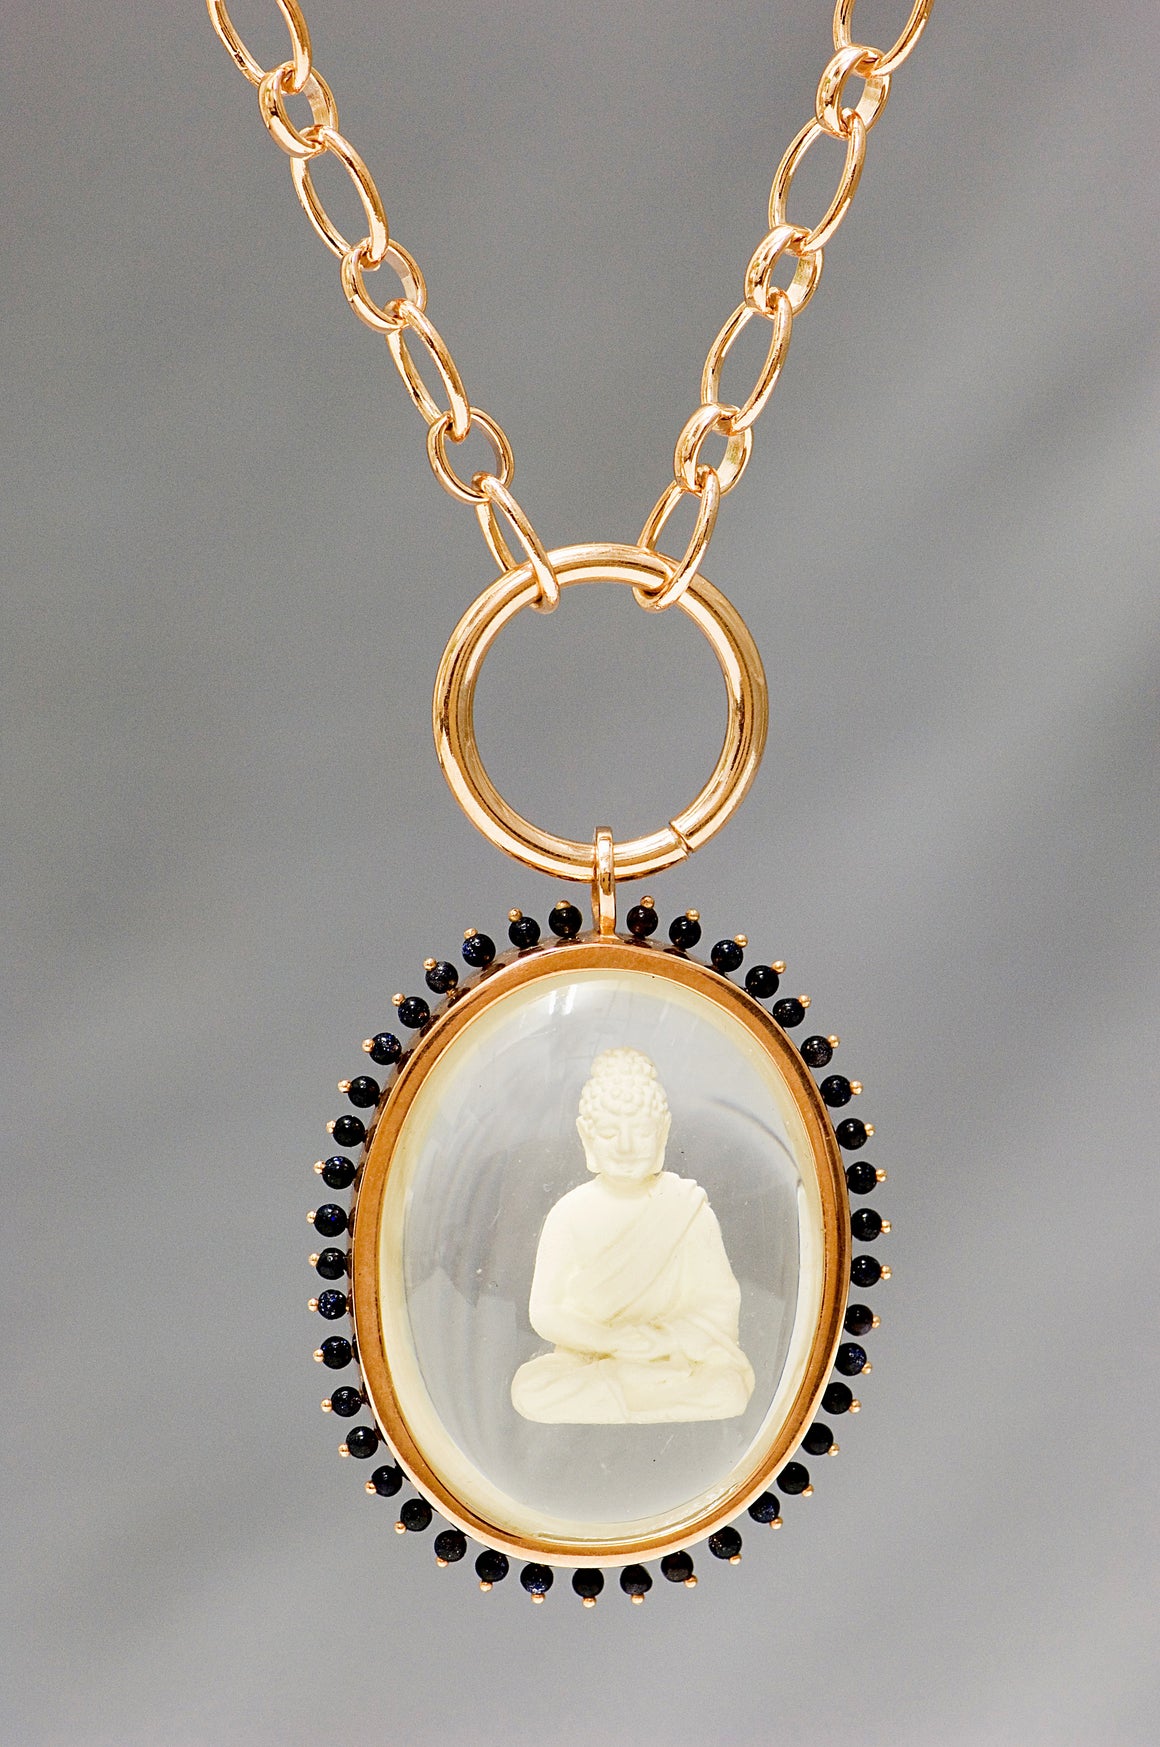 Buddha pendant with stones